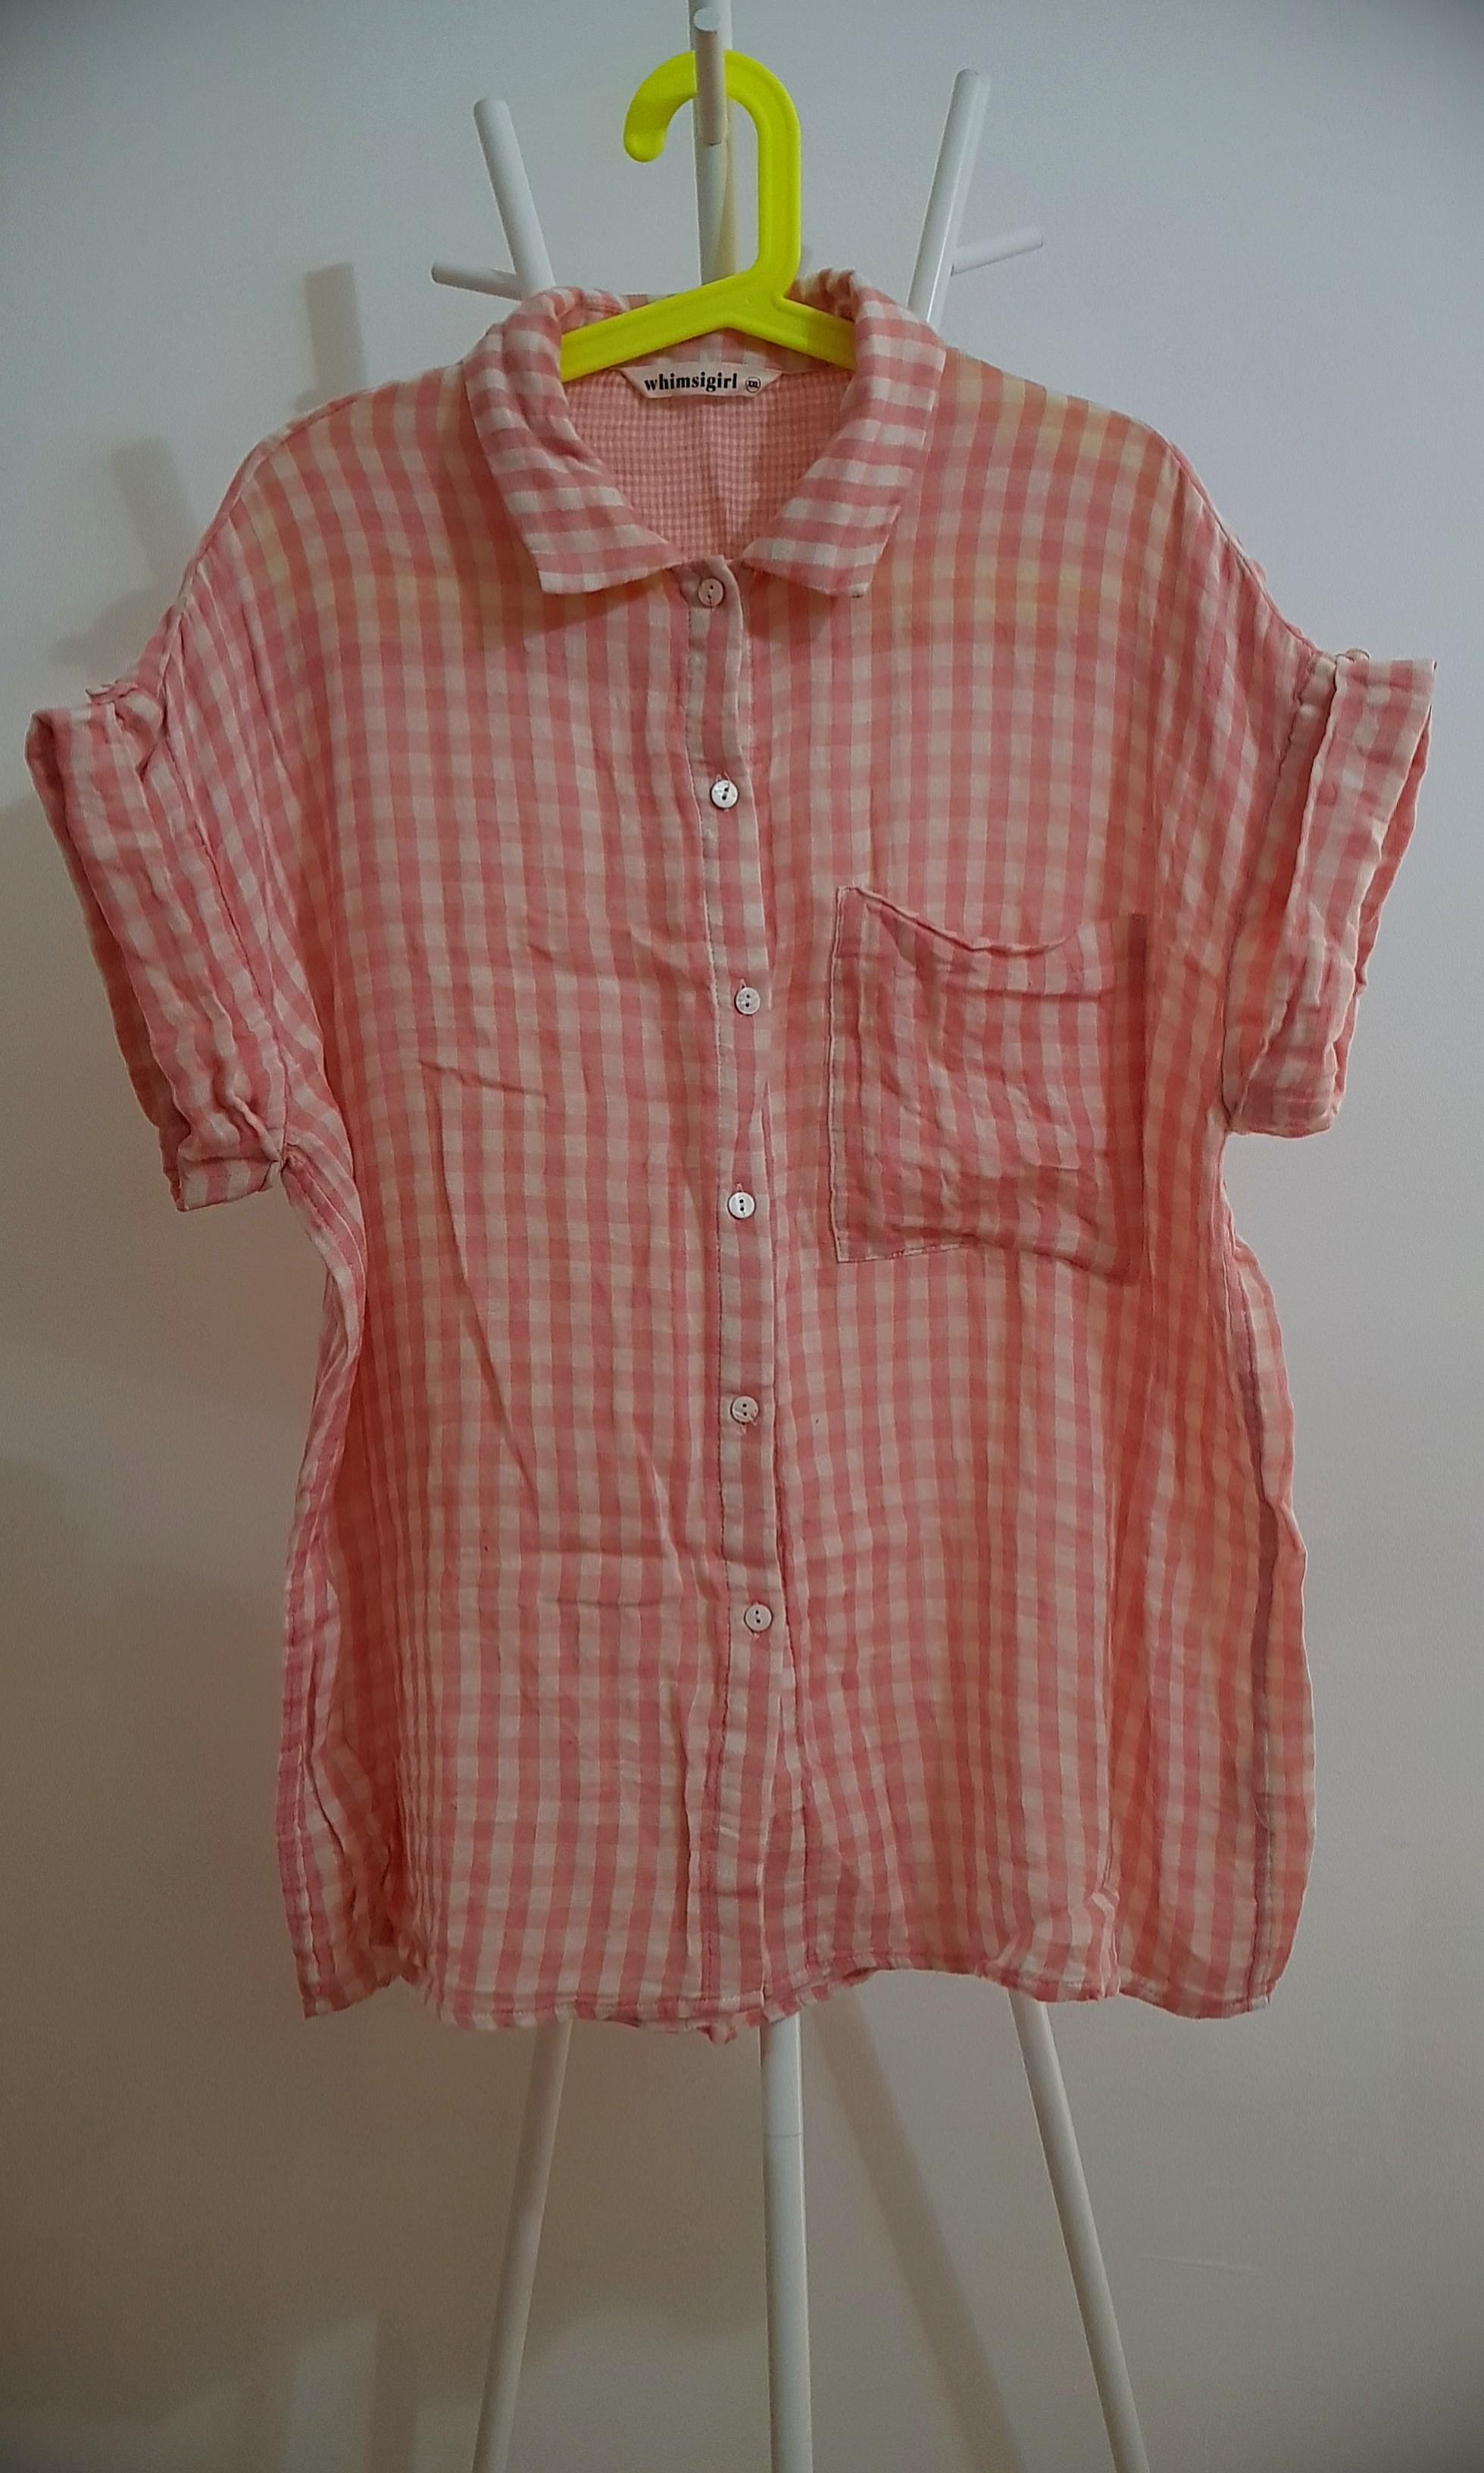 The Picnic Pink Gingham Dress Shirt